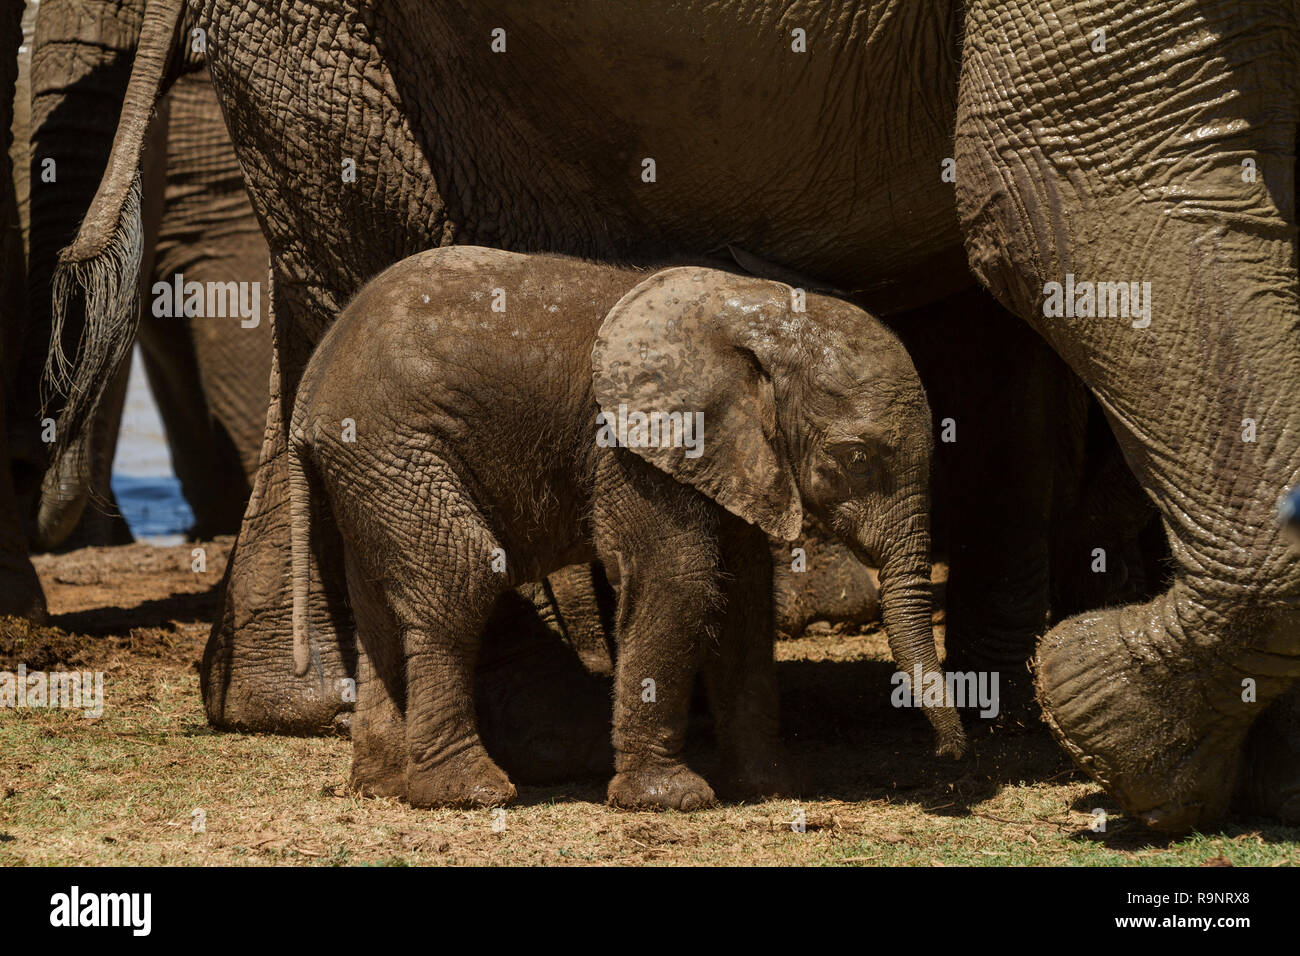 Baby elephant seeking protection from adult elephants, Addo Elephant National Park, South Africa Stock Photo